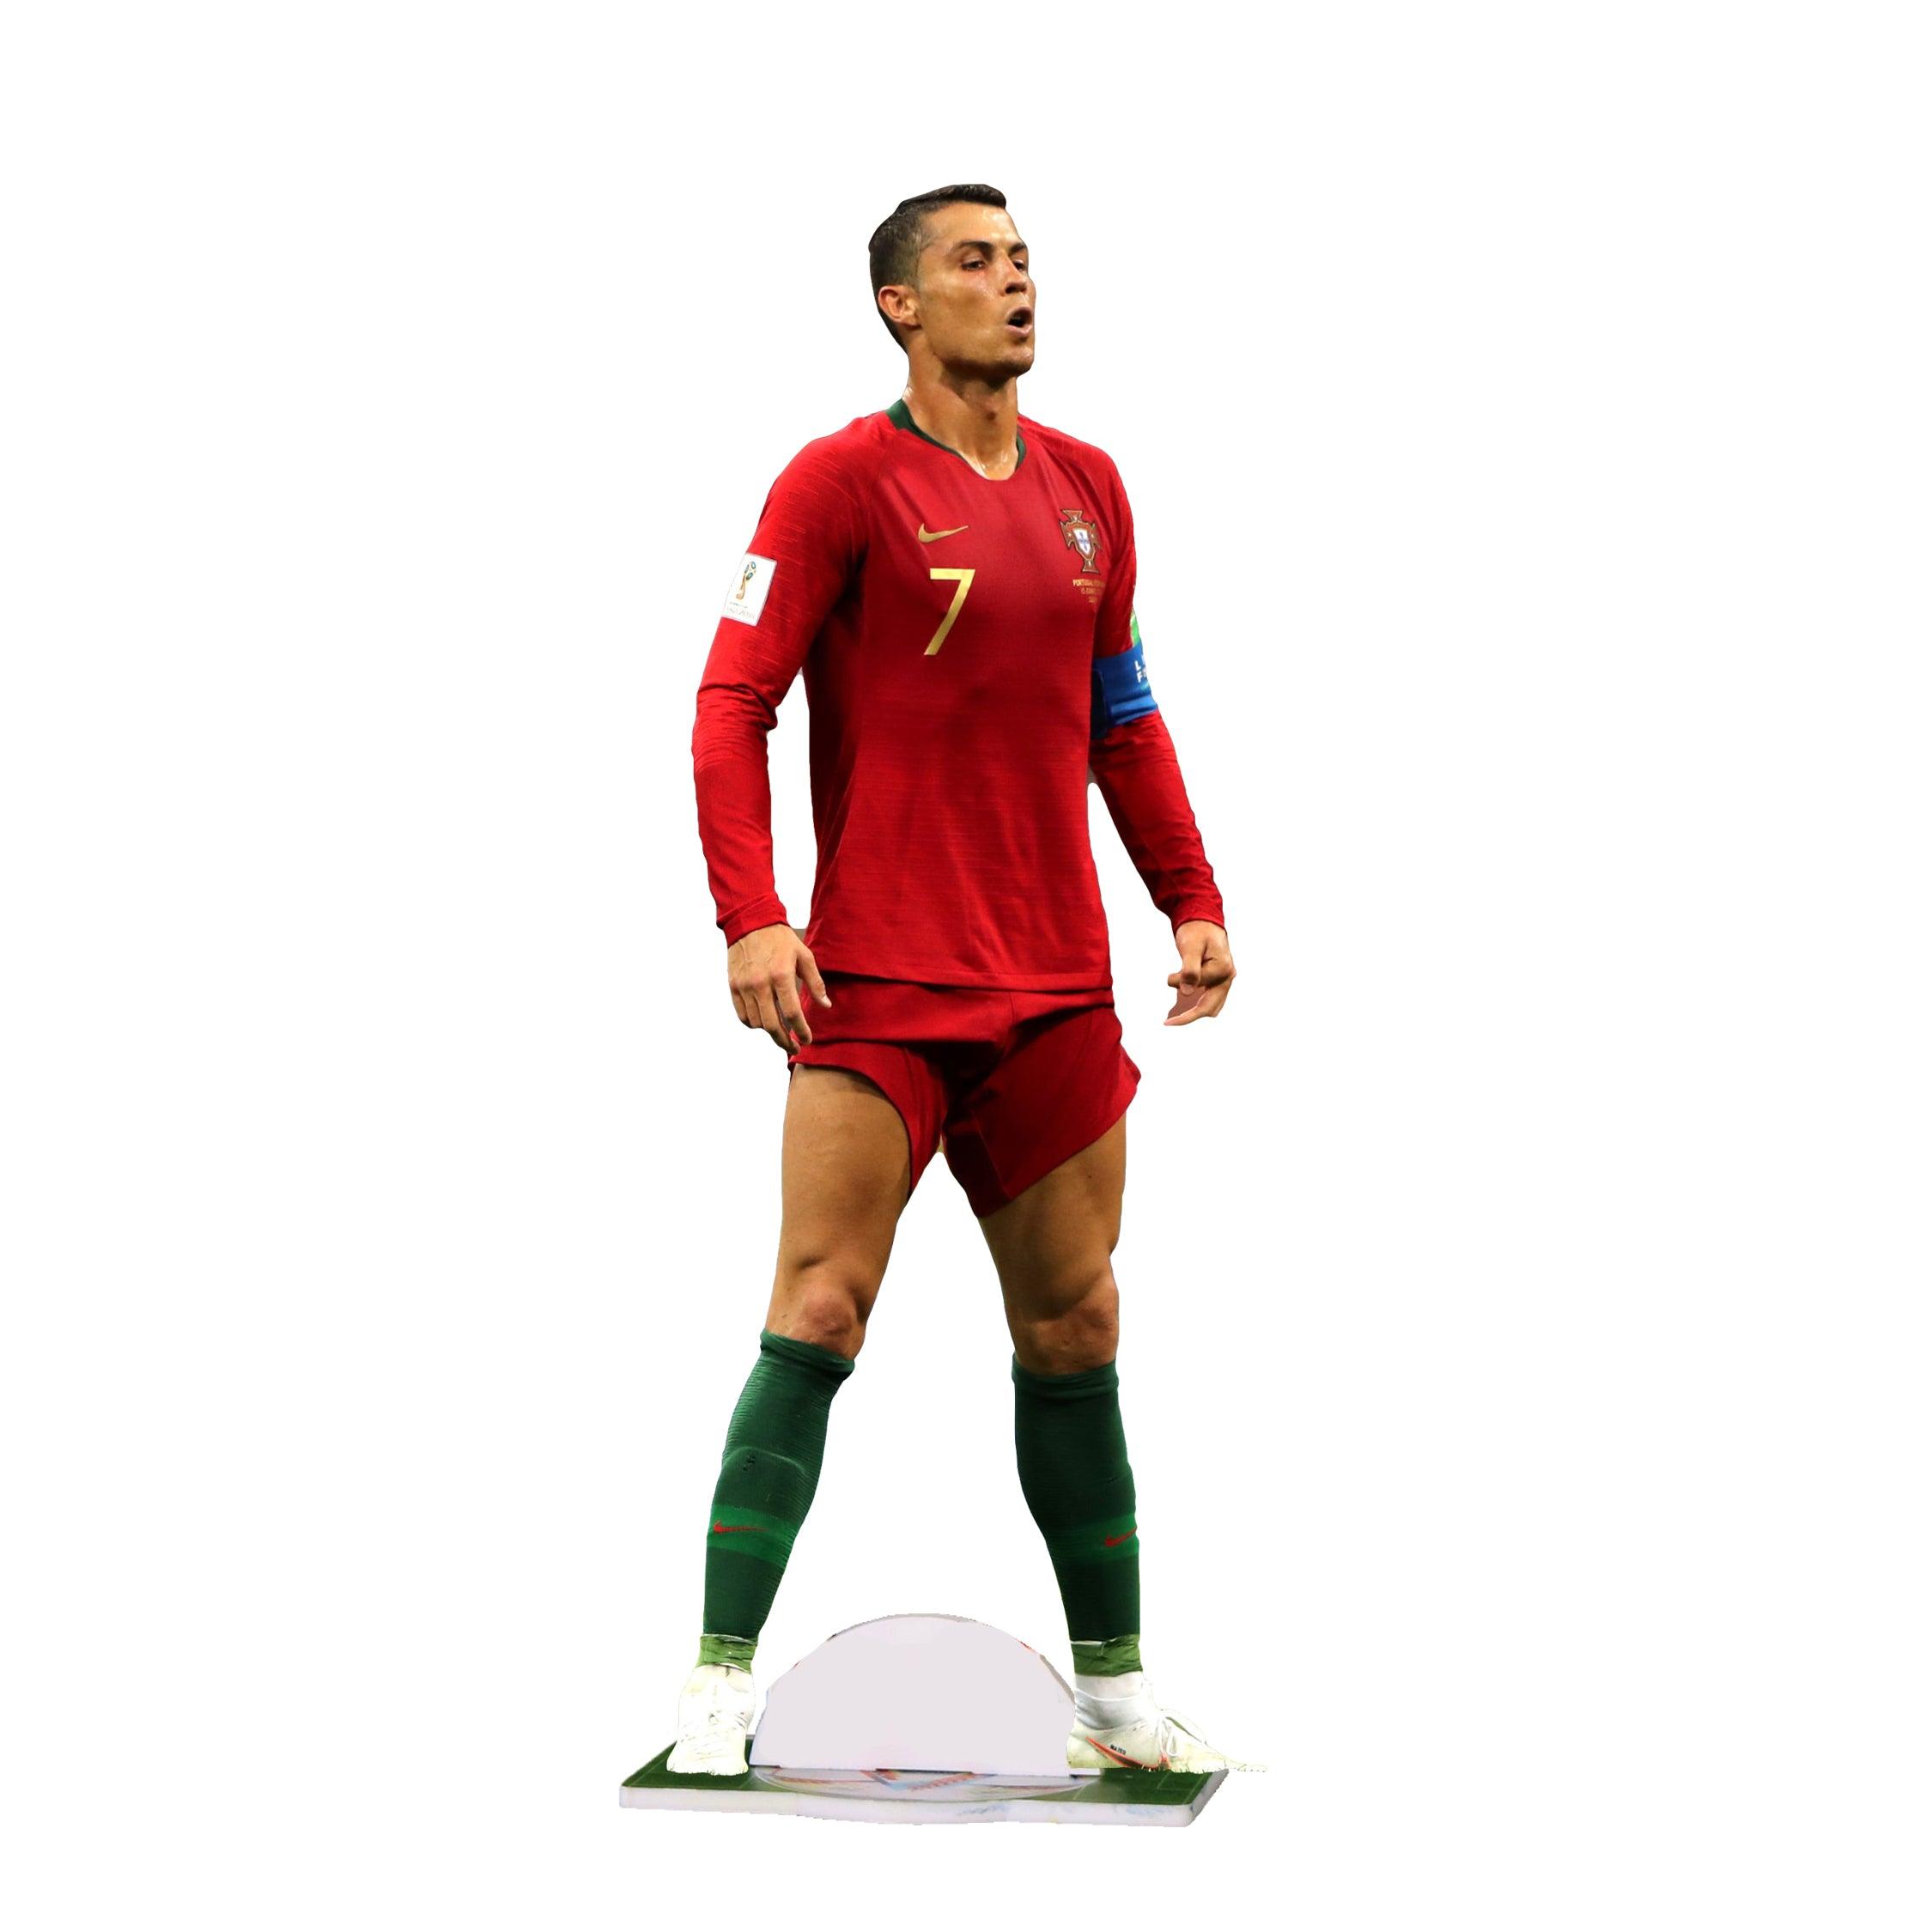 Cristiano Ronaldo Cutout - Orbiz Creativez